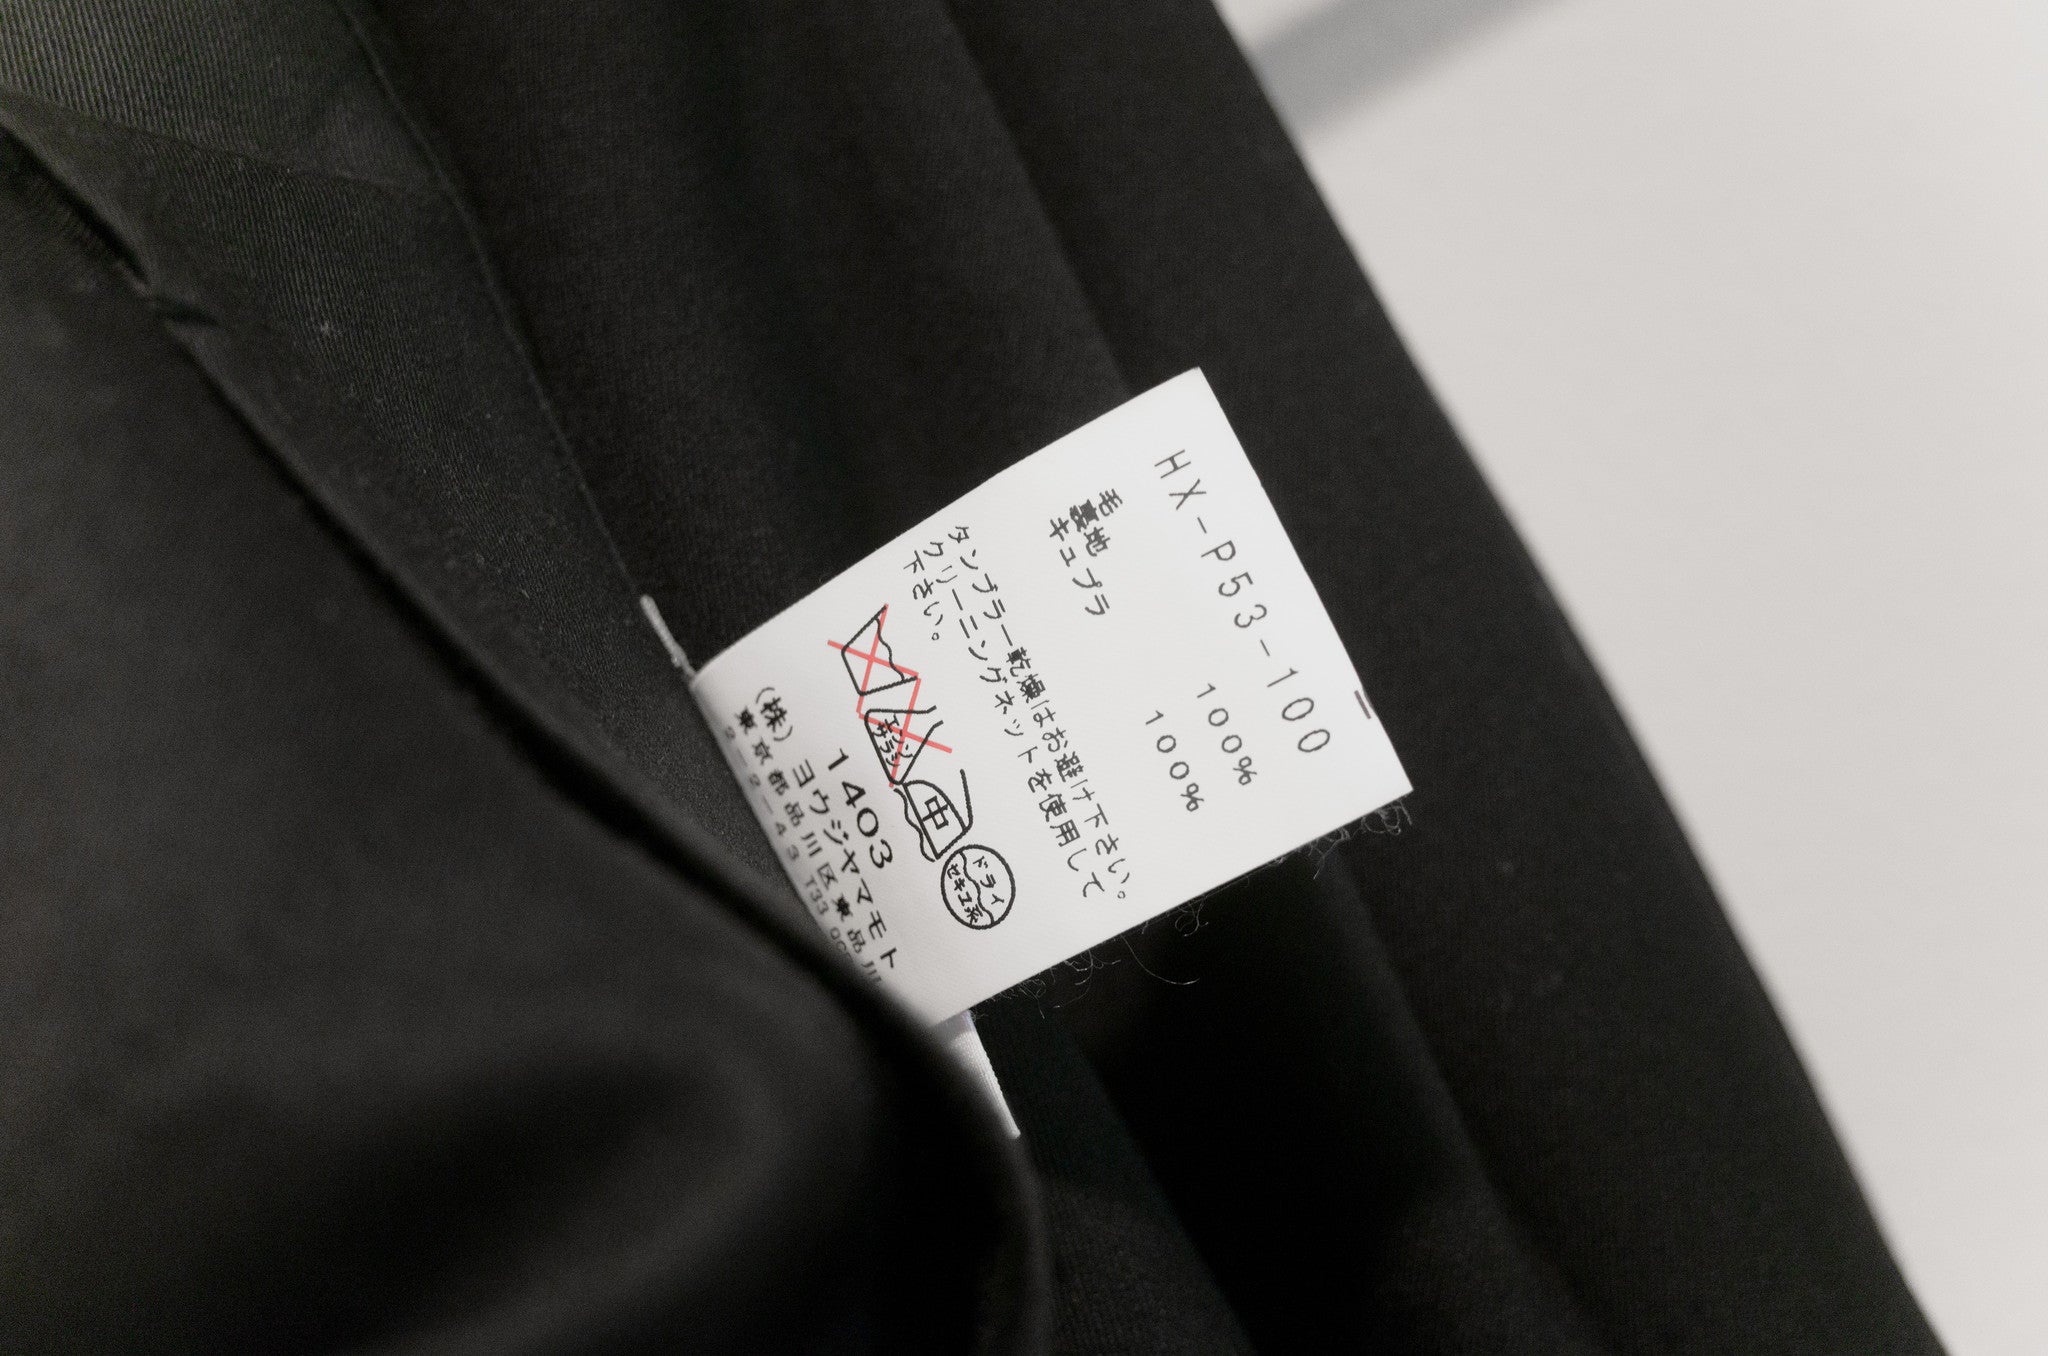 Yohji Yamamoto Pour Homme SS13 Look 26 String-Tie Suit 2 – HUIBEN